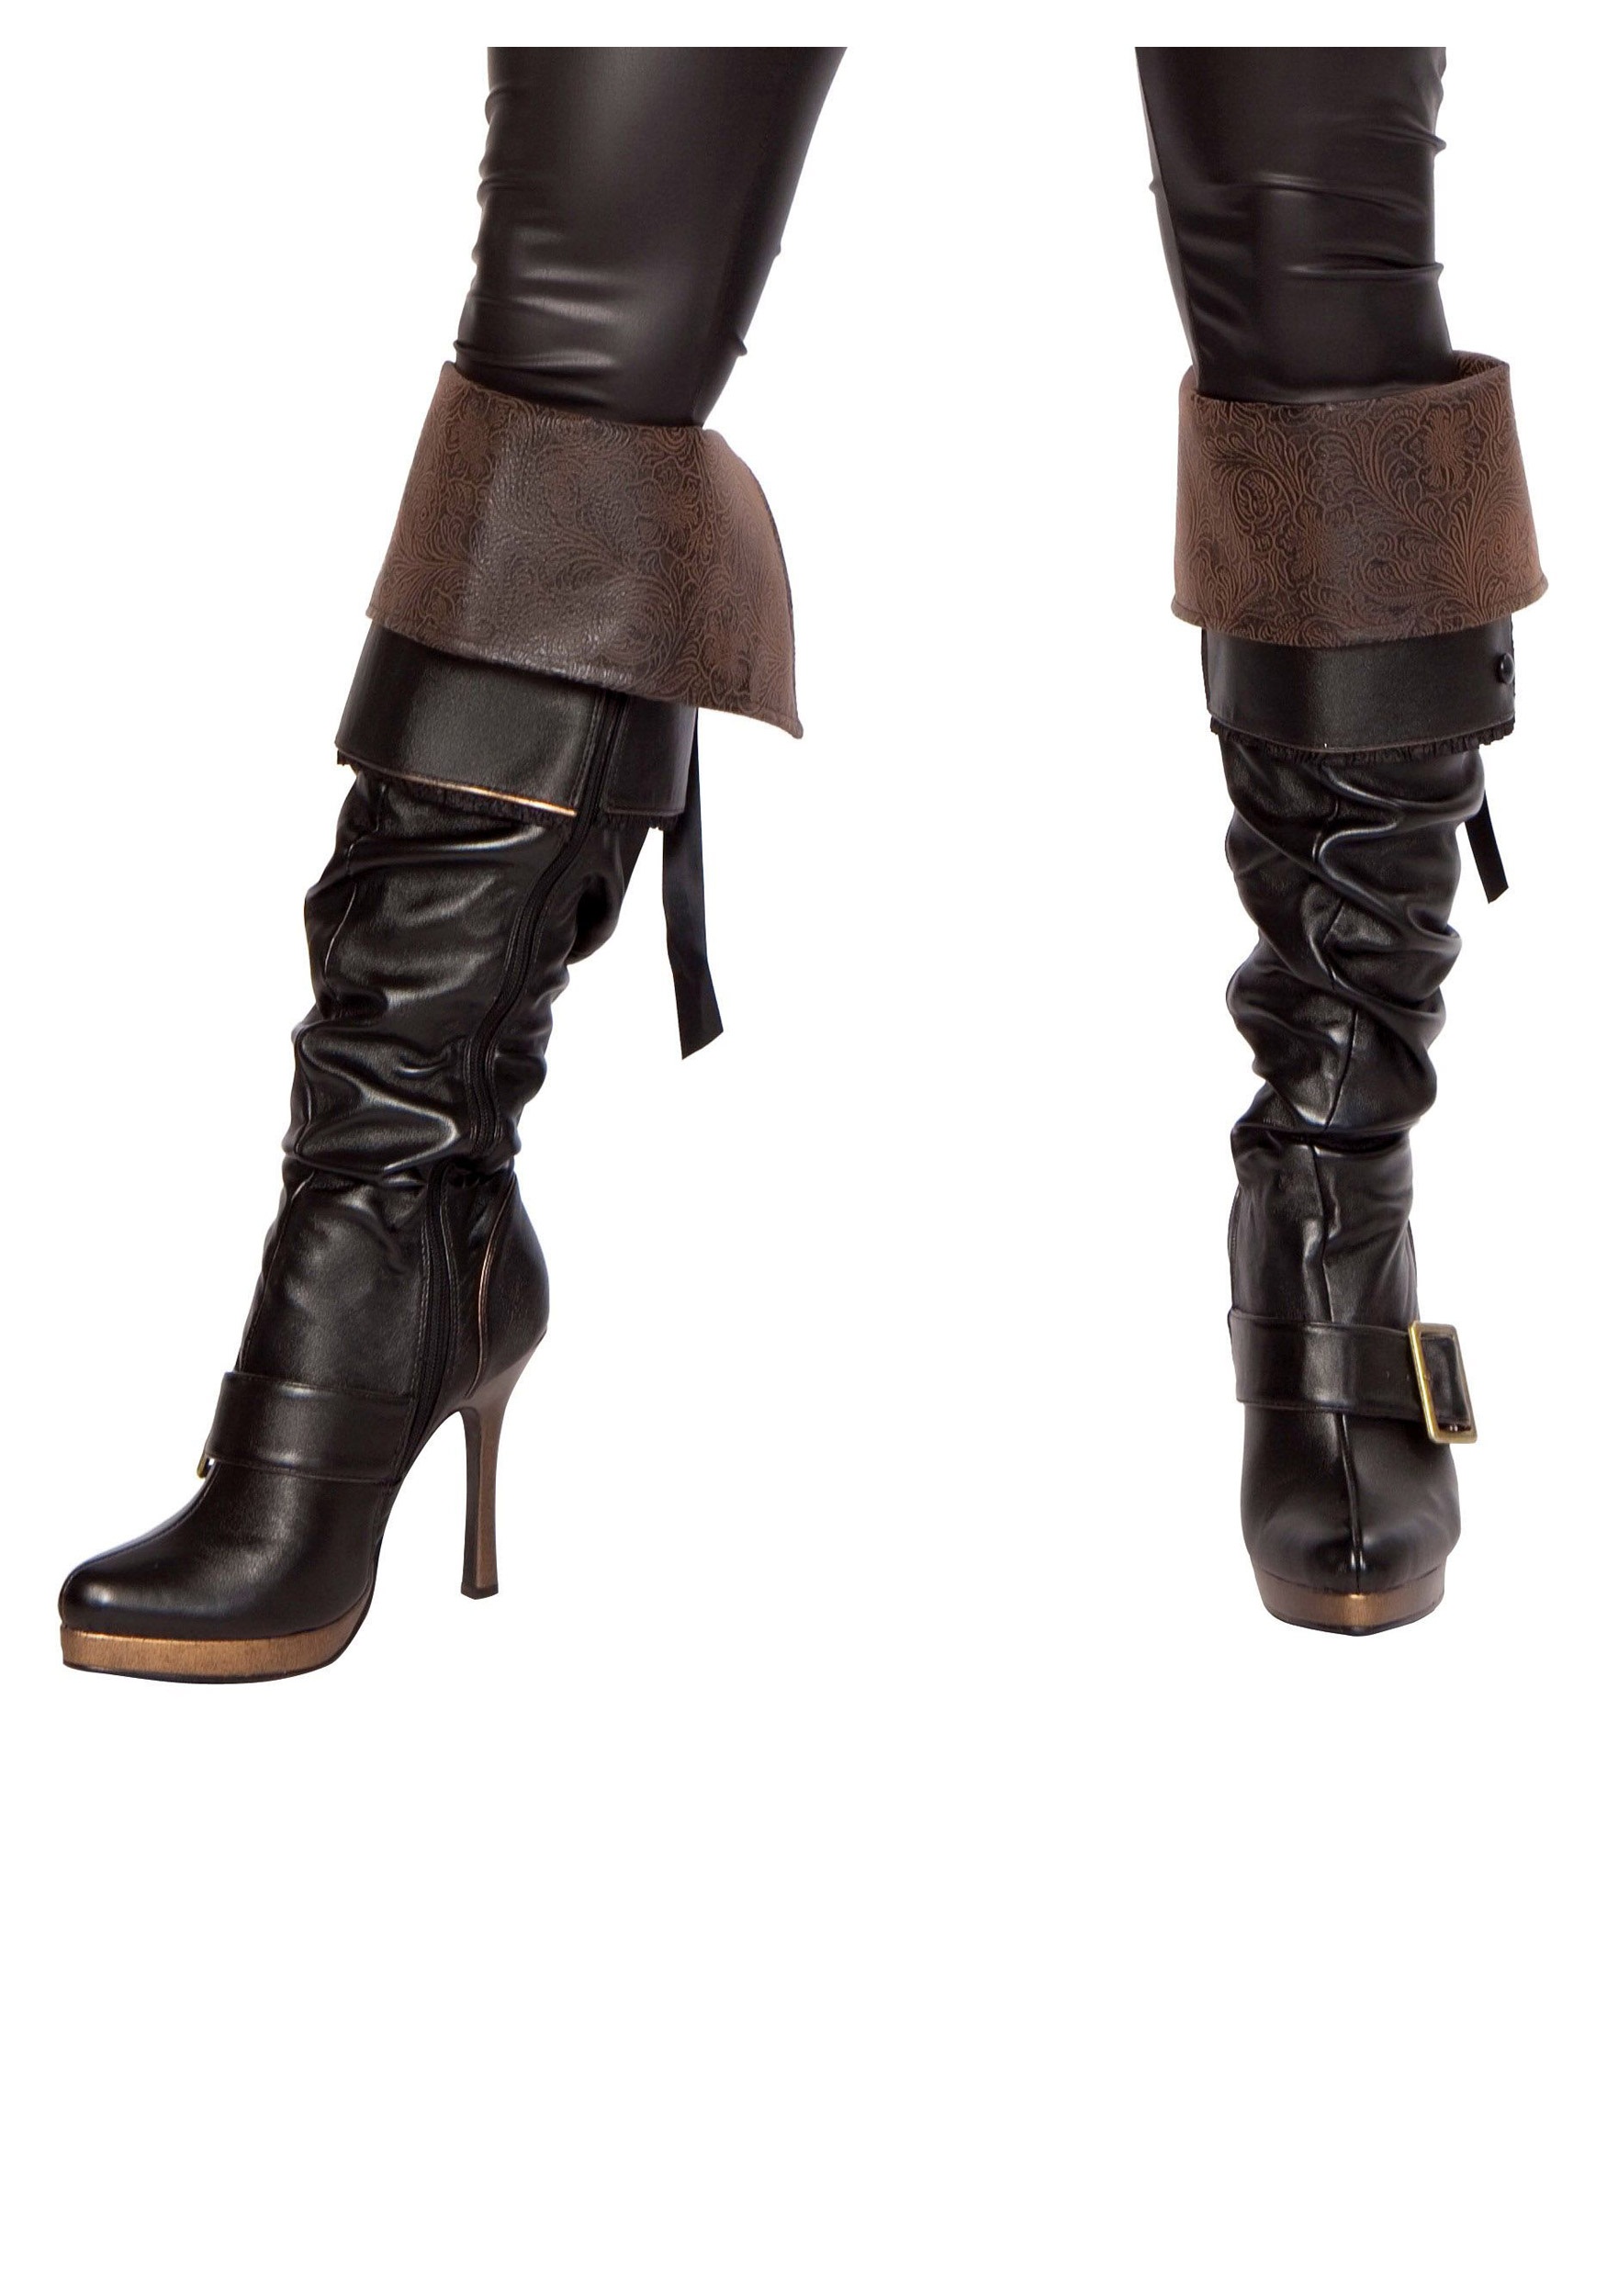 pirate boots women